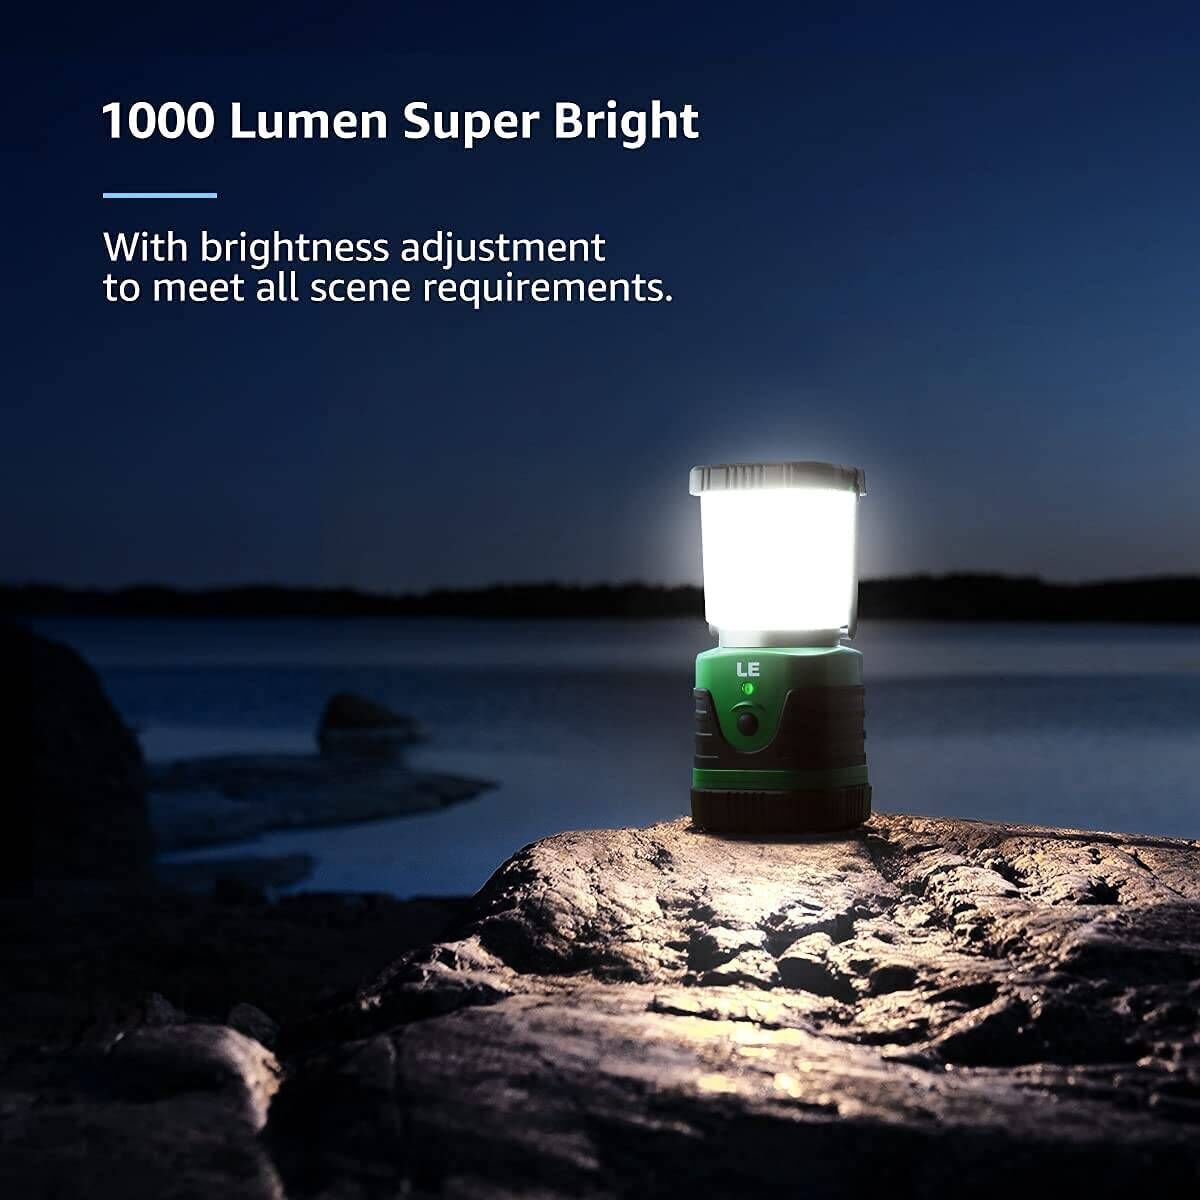 Compact 500 Lumen LED Lantern With SMD Bulb - Flashlights Lanterns